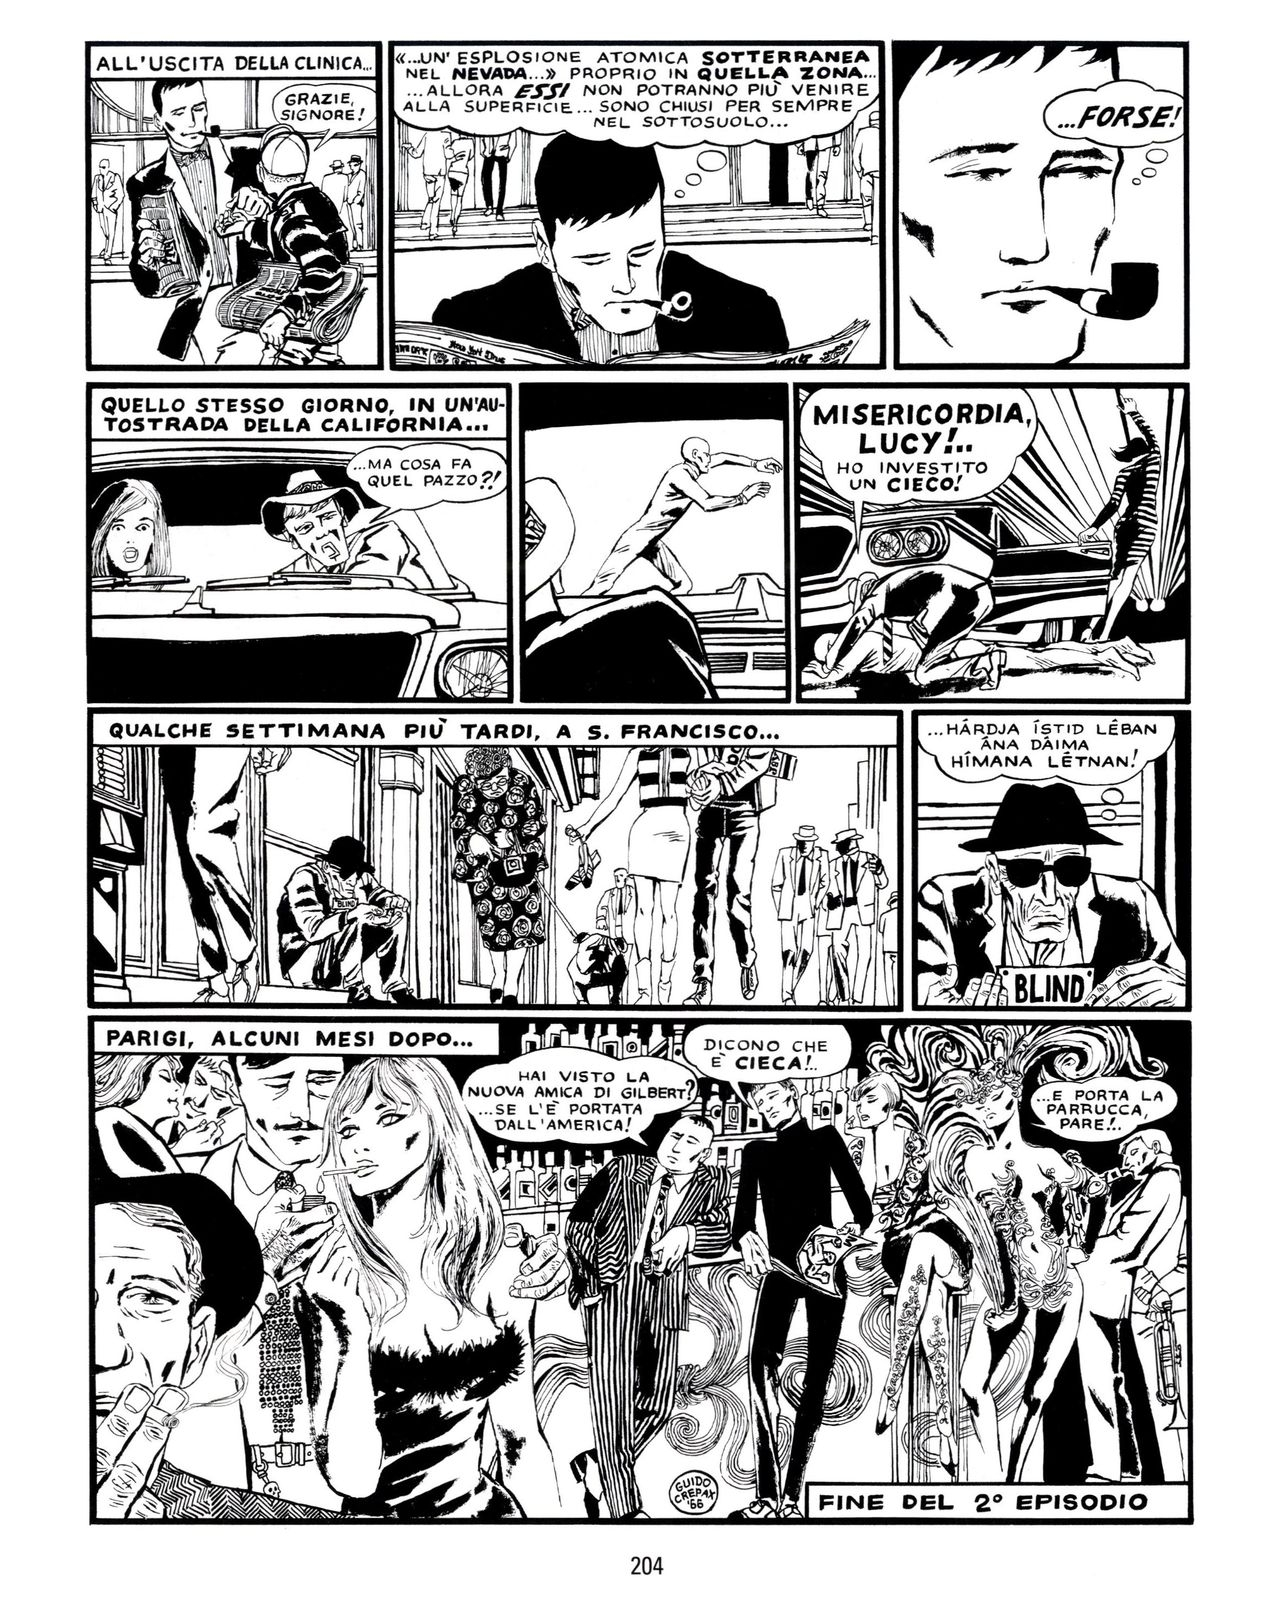 [Guido Crepax] Erotica Fumetti #25 : L'ascesa dei sotterranei : I cavalieri ciechi [Italian] 205